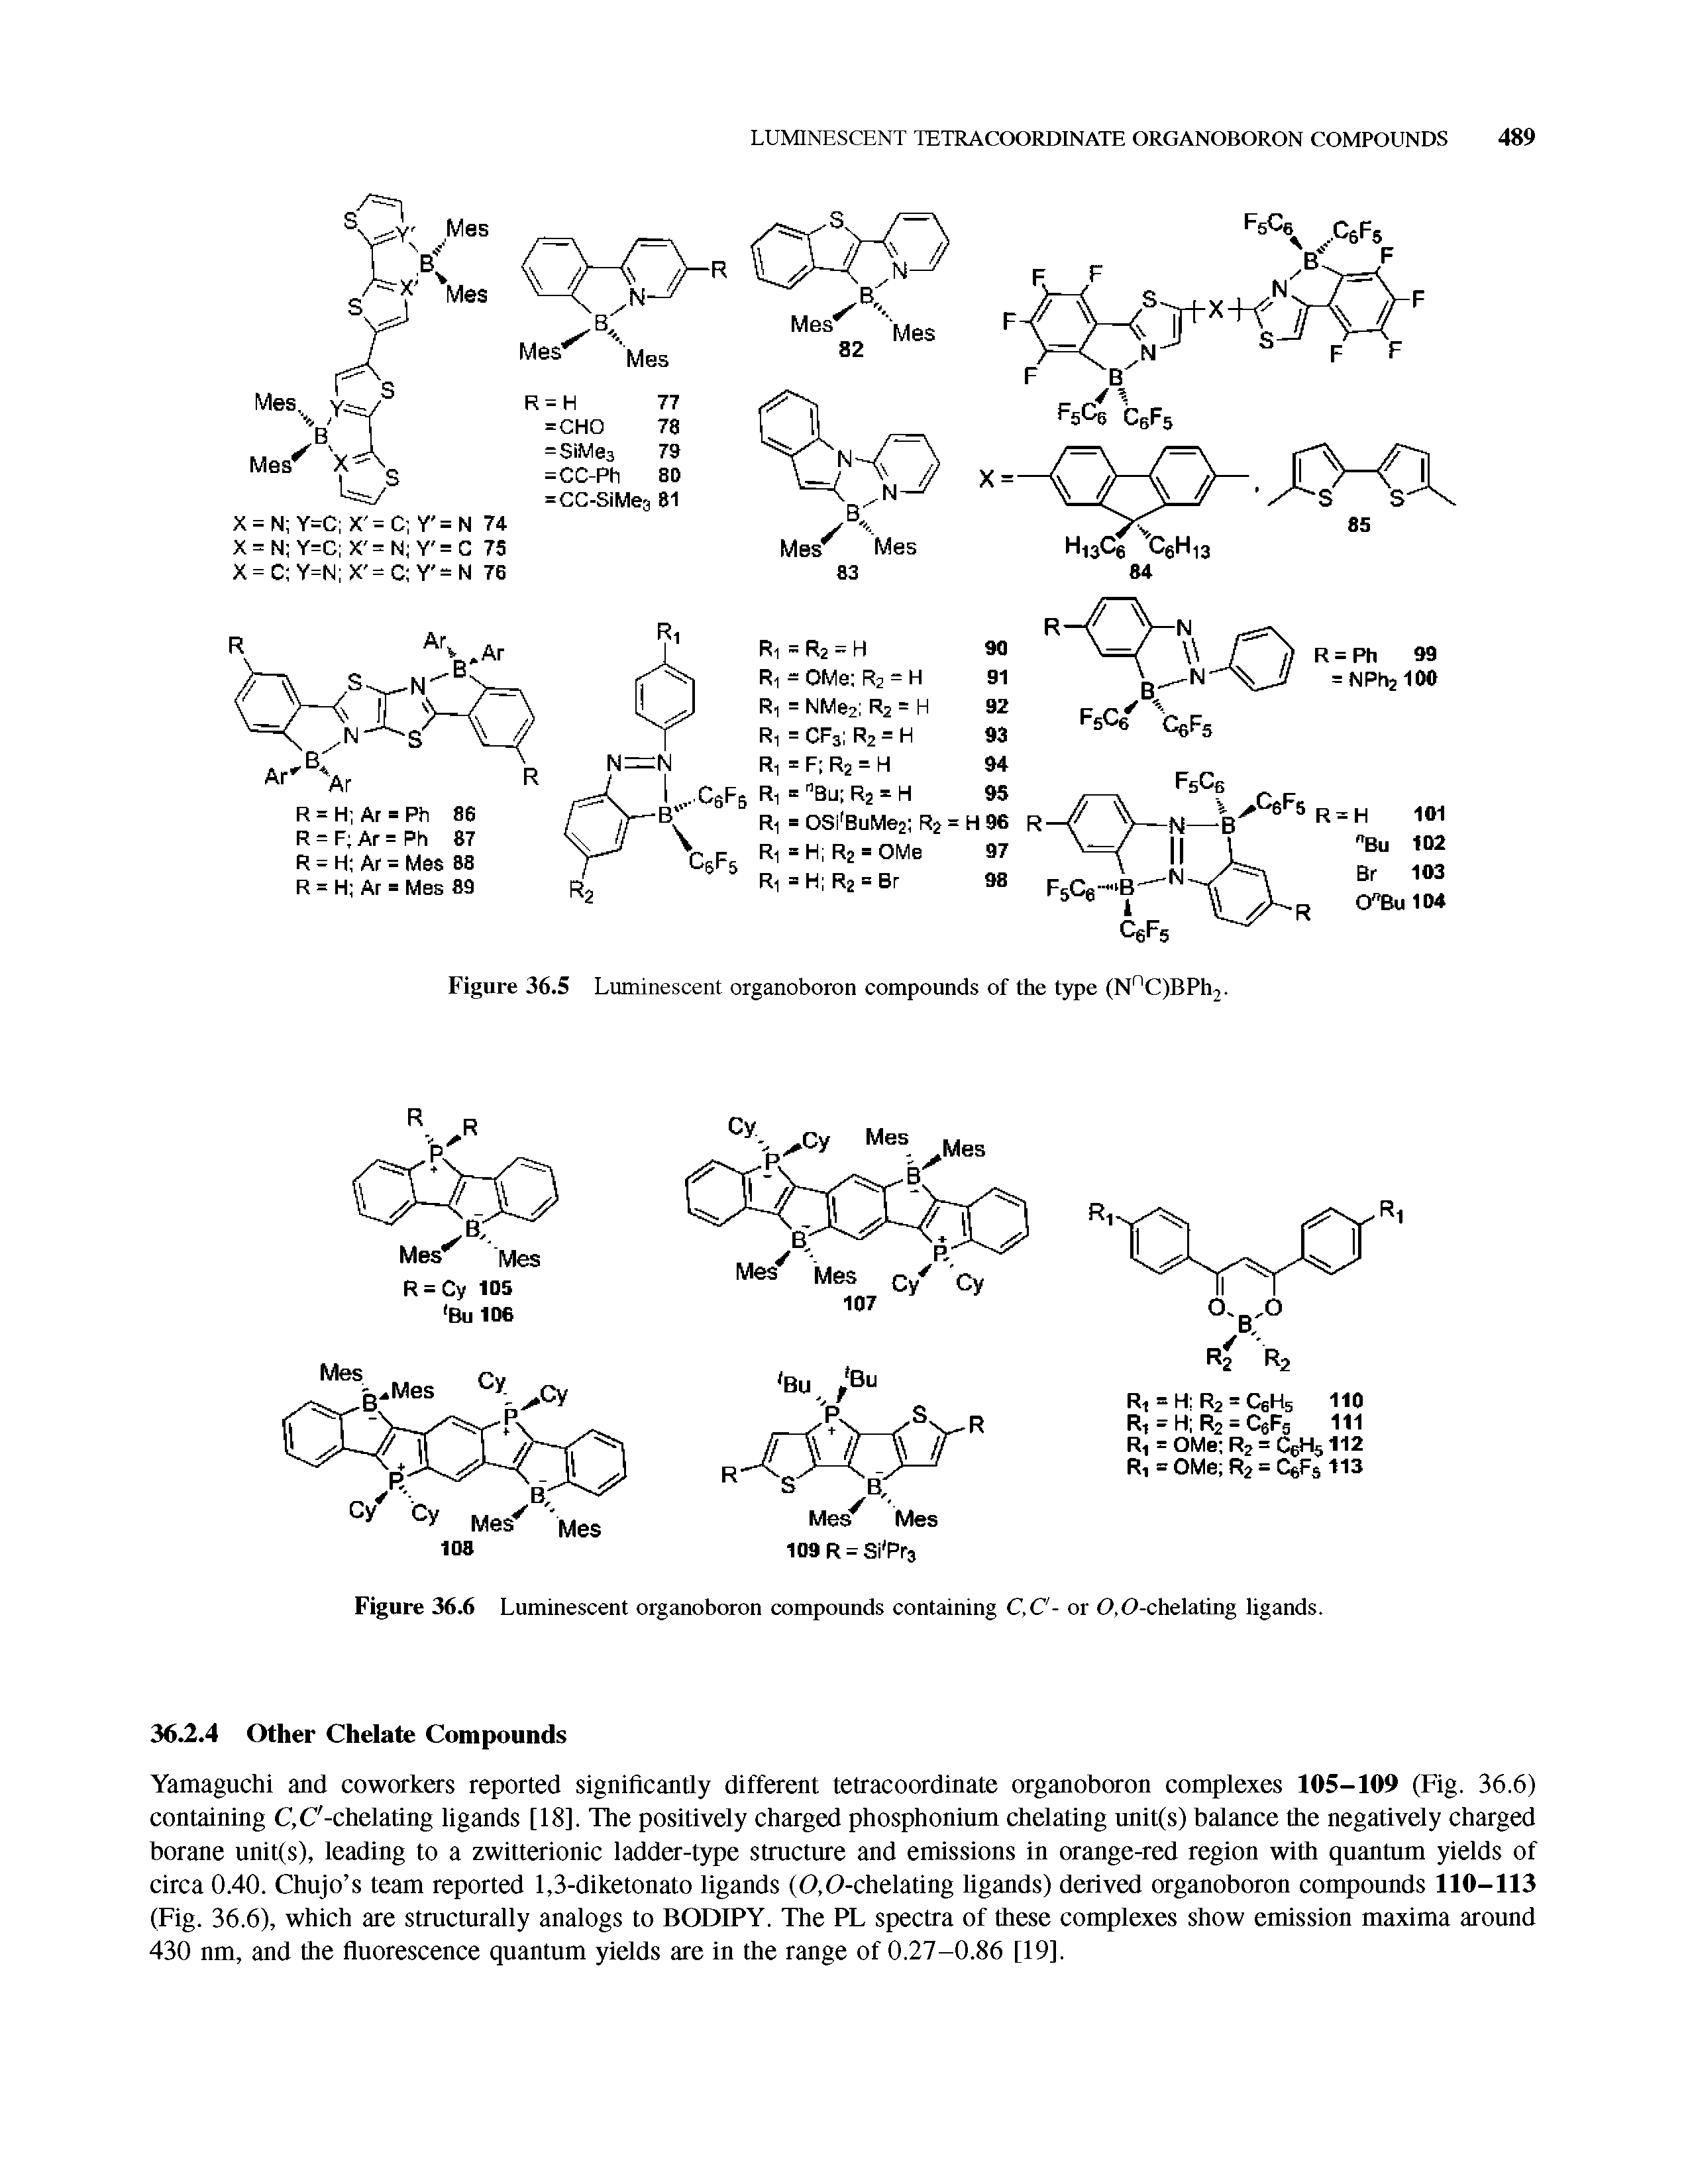 Figure 36.6 Luminescent organoboron compounds containing C,C- or 0,0-chelating ligands.